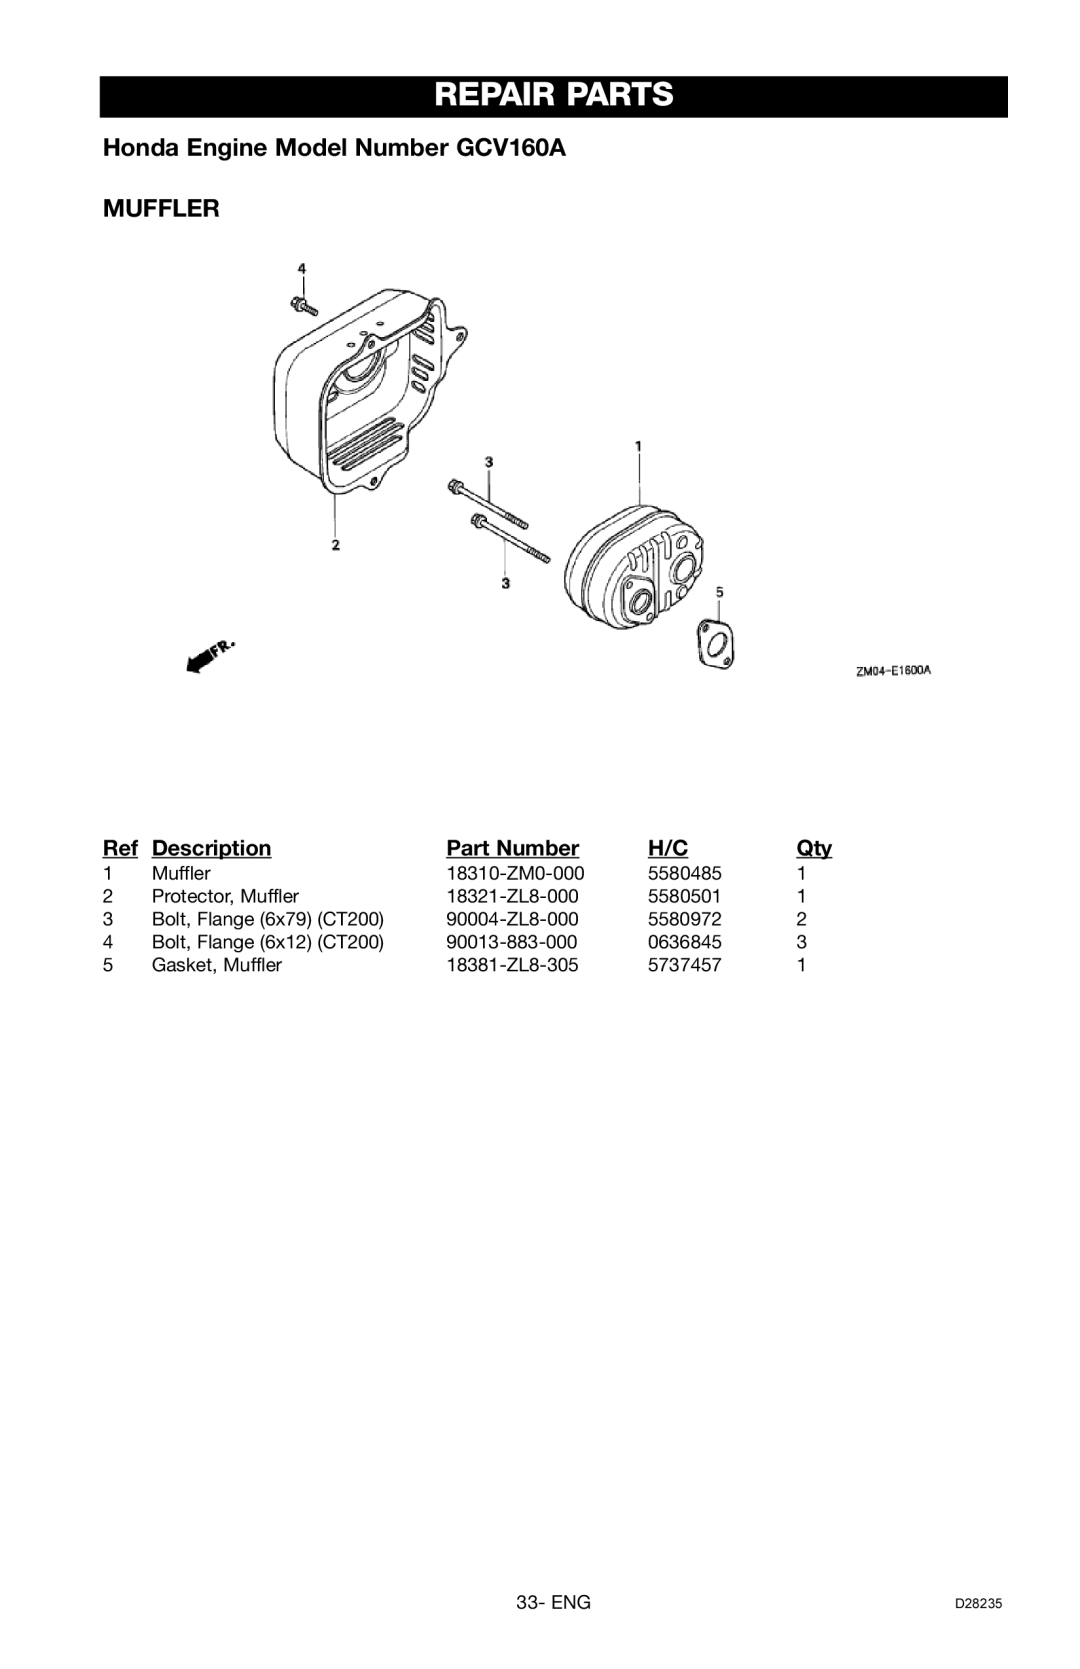 Craftsman 919.672241, D28235 owner manual Repair Parts, Honda Engine Model Number GCV160A MUFFLER, Description, Part Number 